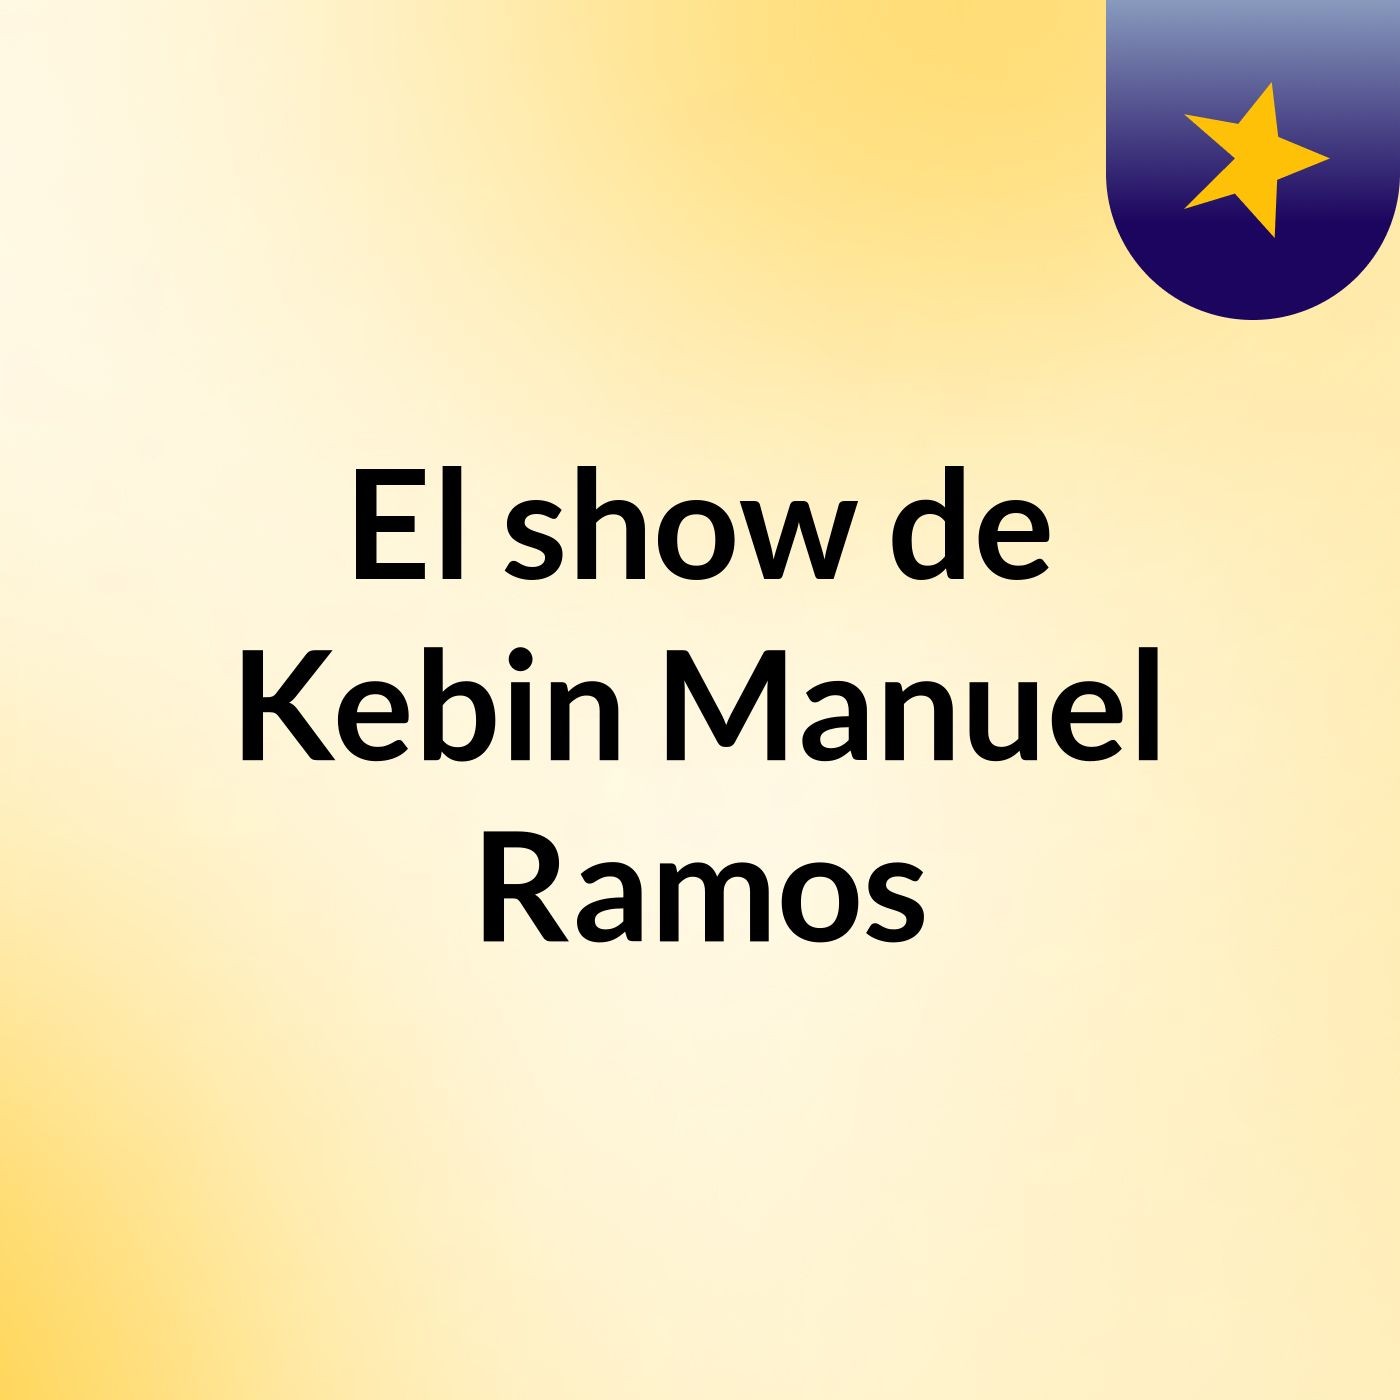 El show de Kebin Manuel Ramos